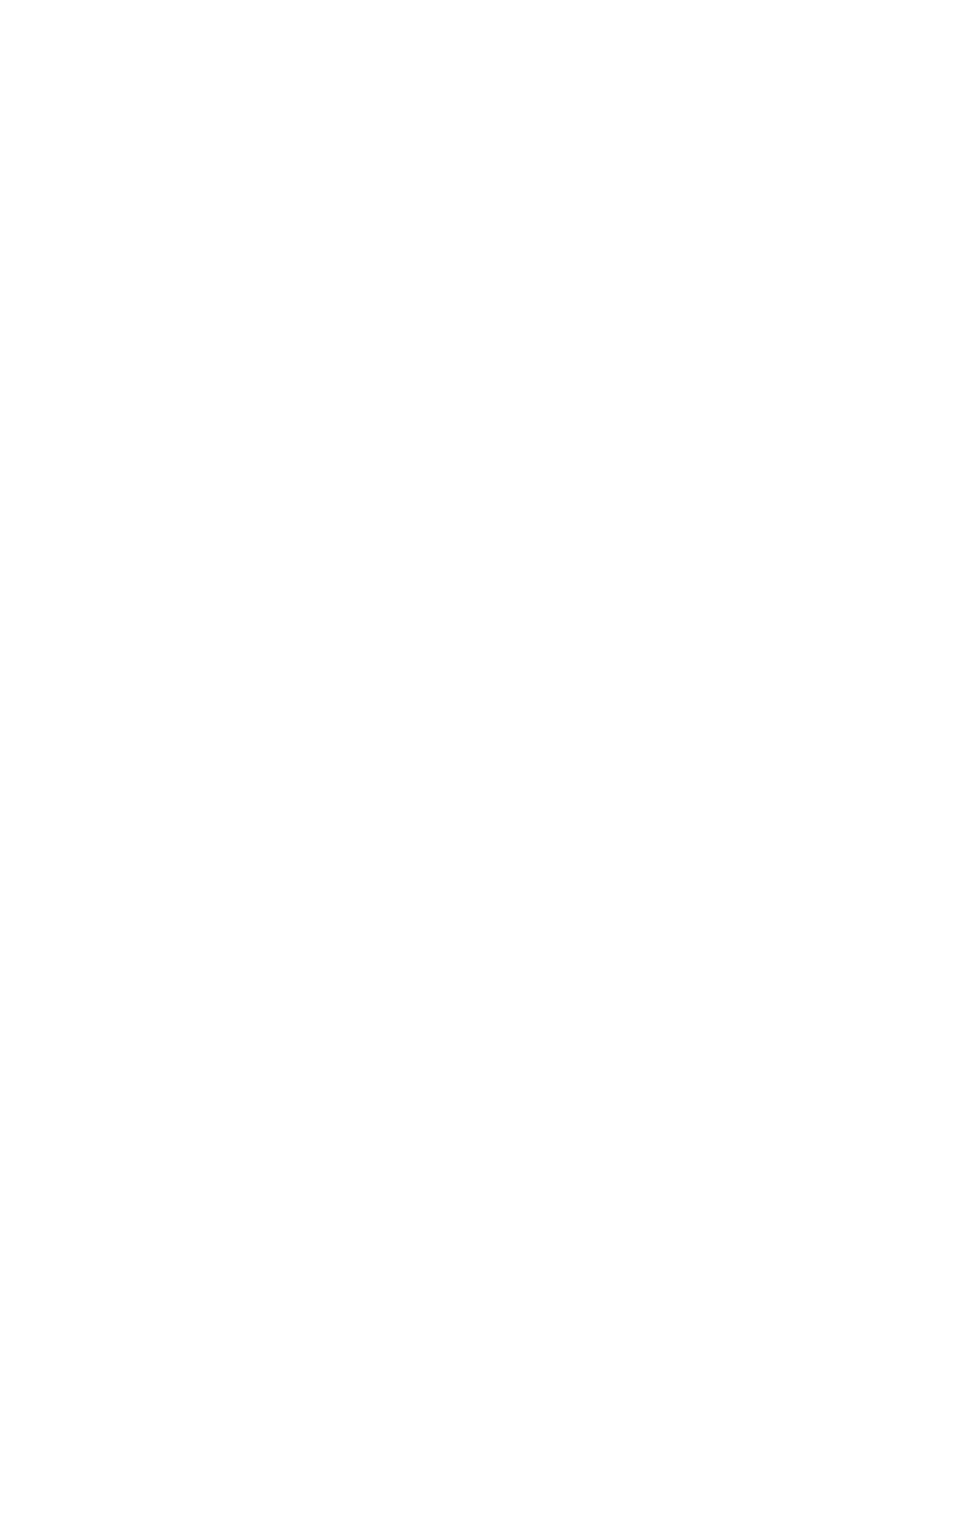 NEXTDC logo for dark backgrounds (transparent PNG)